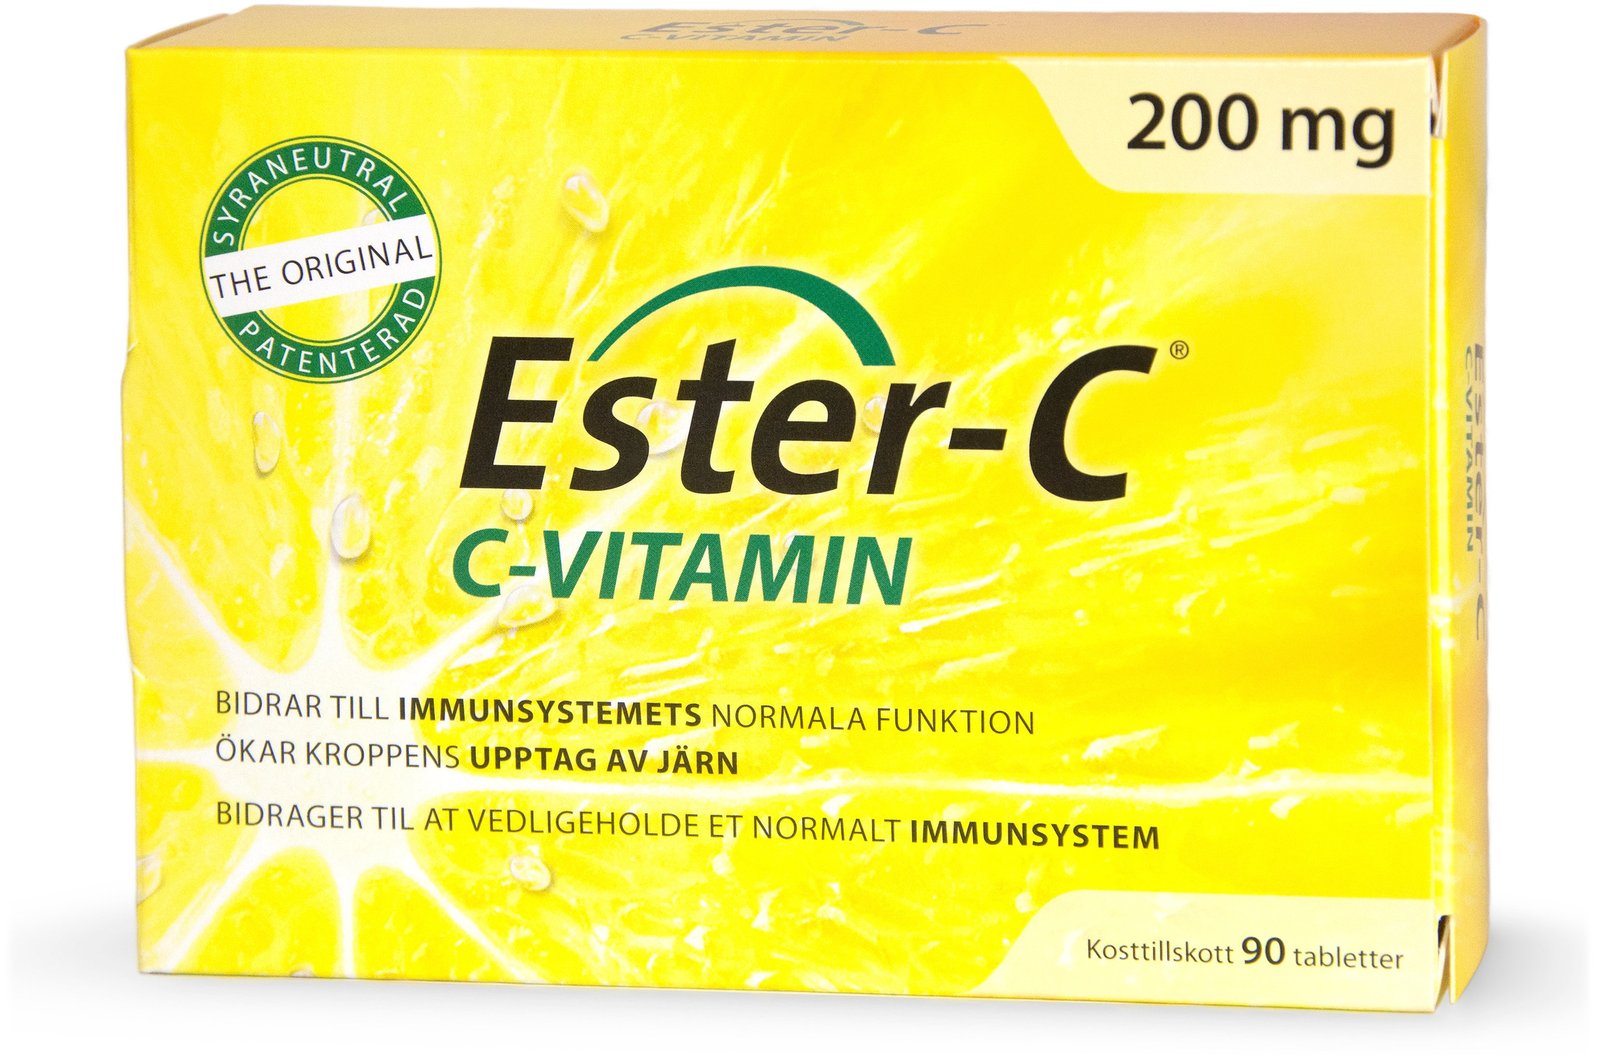 Ester-C 200 mg 90 tabletter